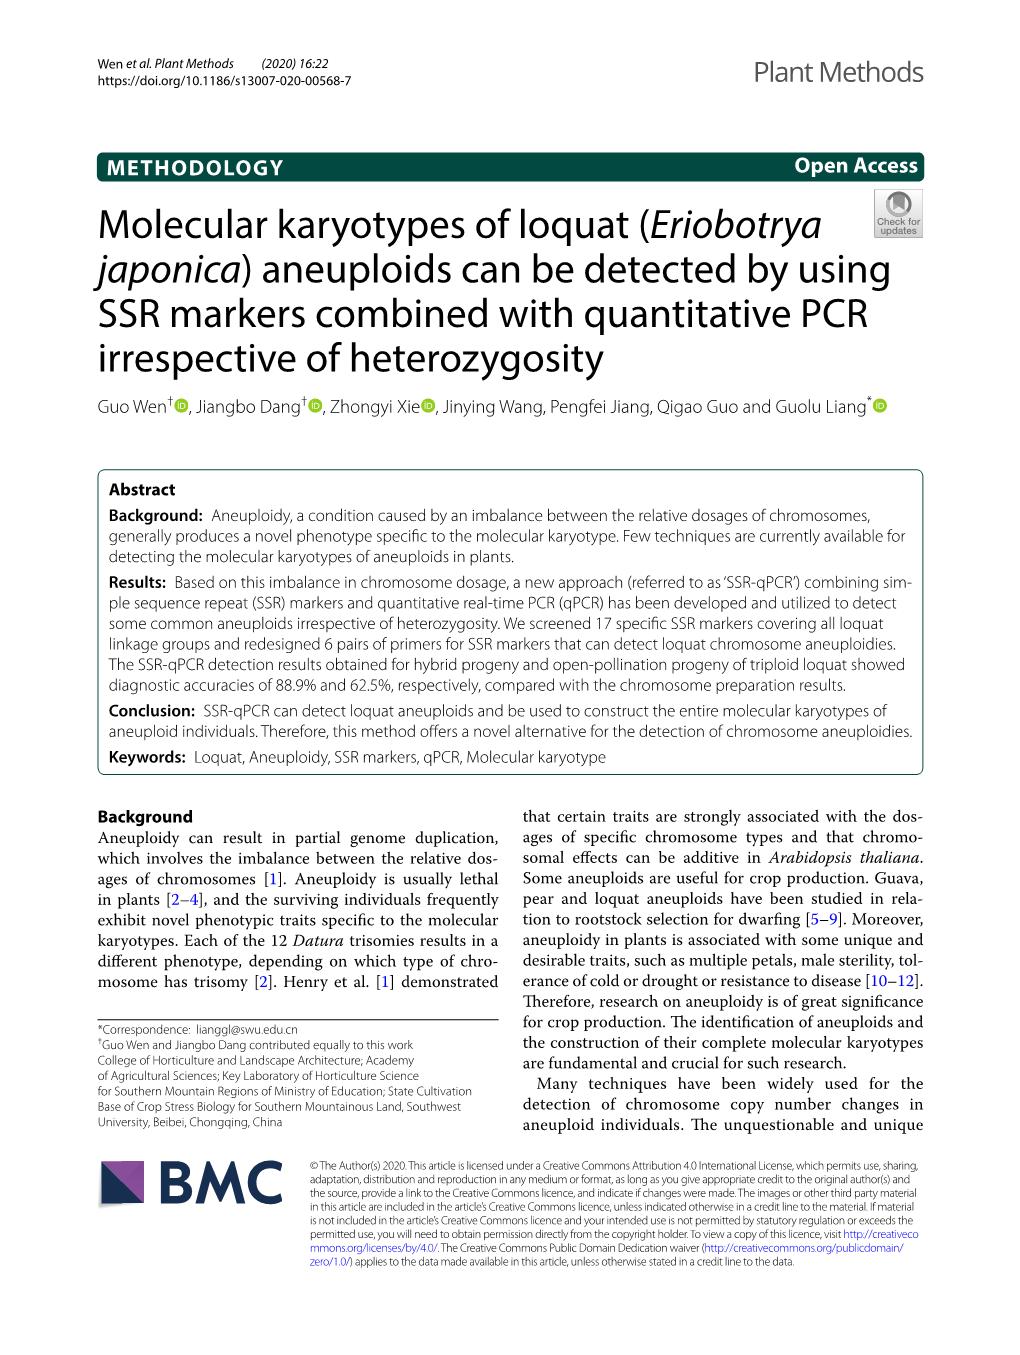 Molecular Karyotypes of Loquat (Eriobotrya